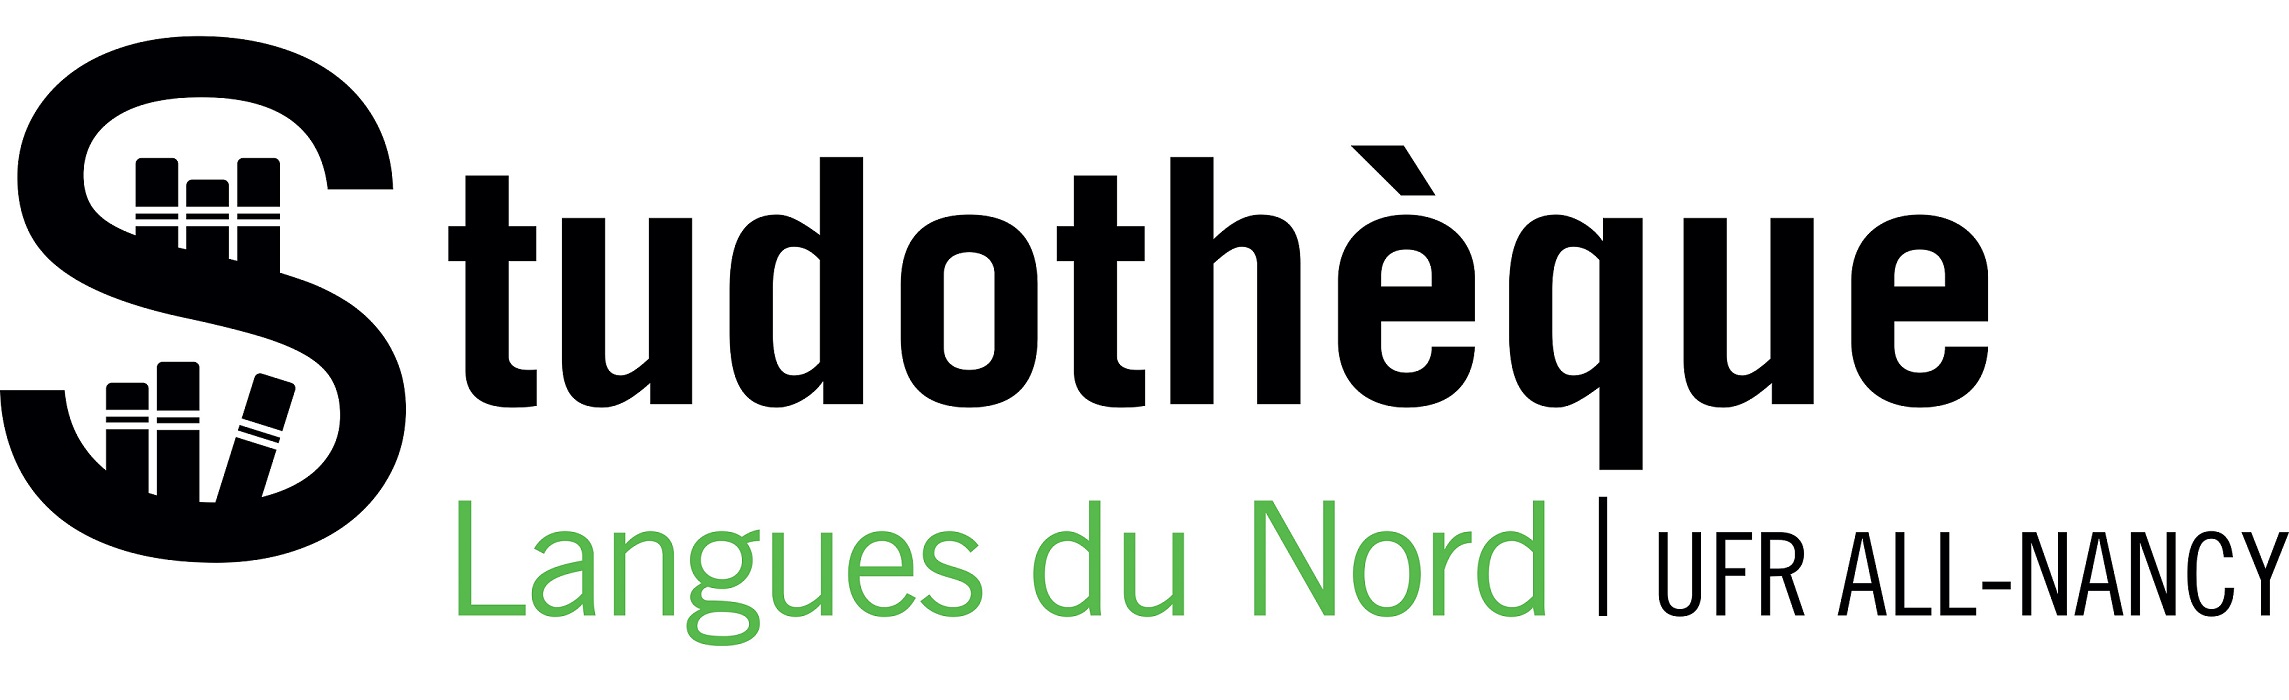 Studothèque Langues du Nord Logo